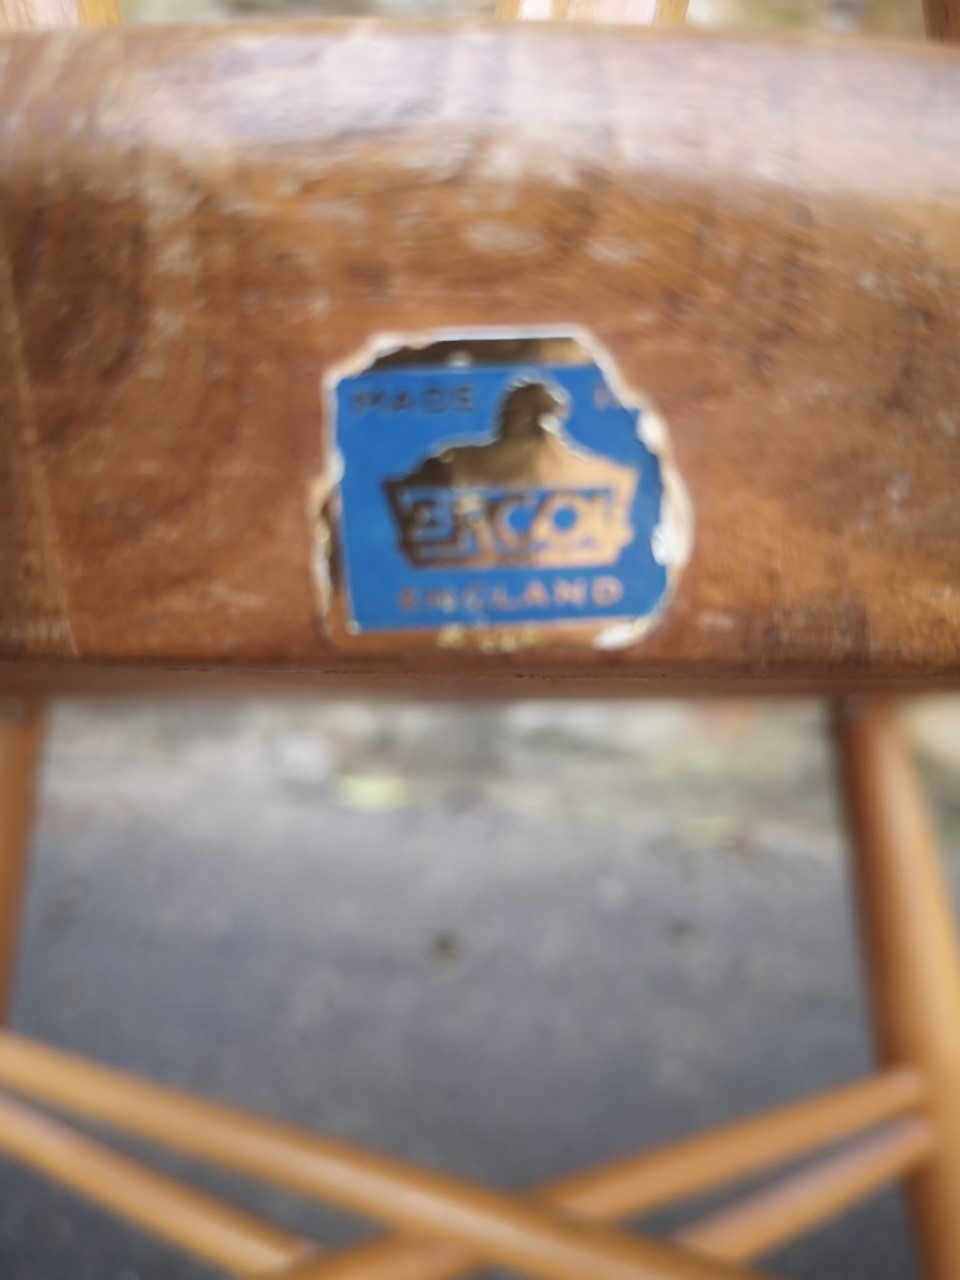 Ercol furniture (Set of four original Ercol chairs)画像